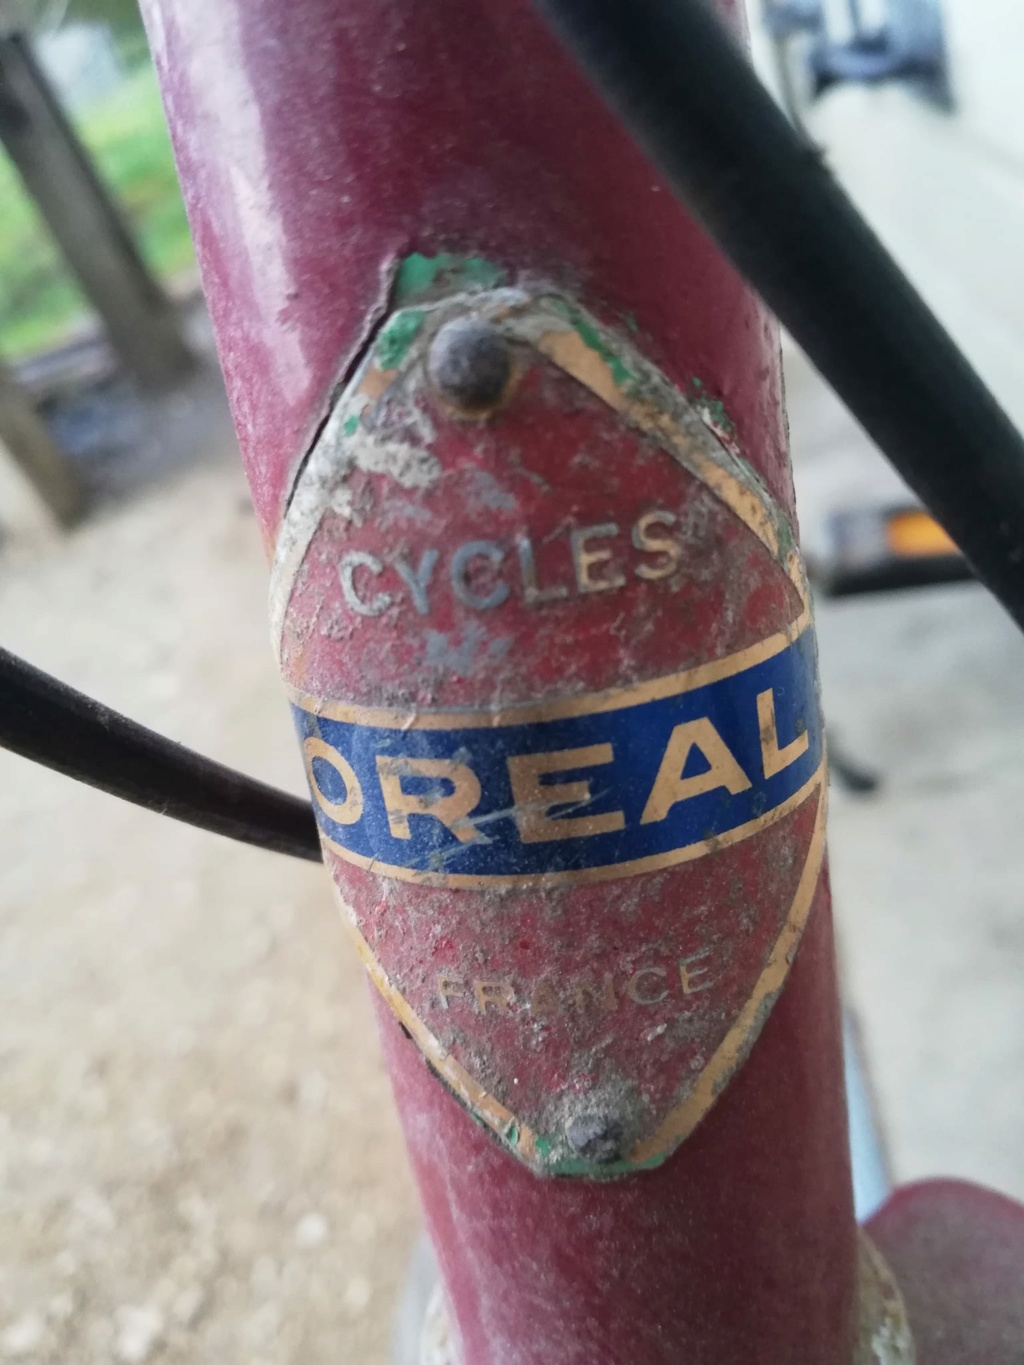 france - CYCLES OREAL FRANCE Oreal210